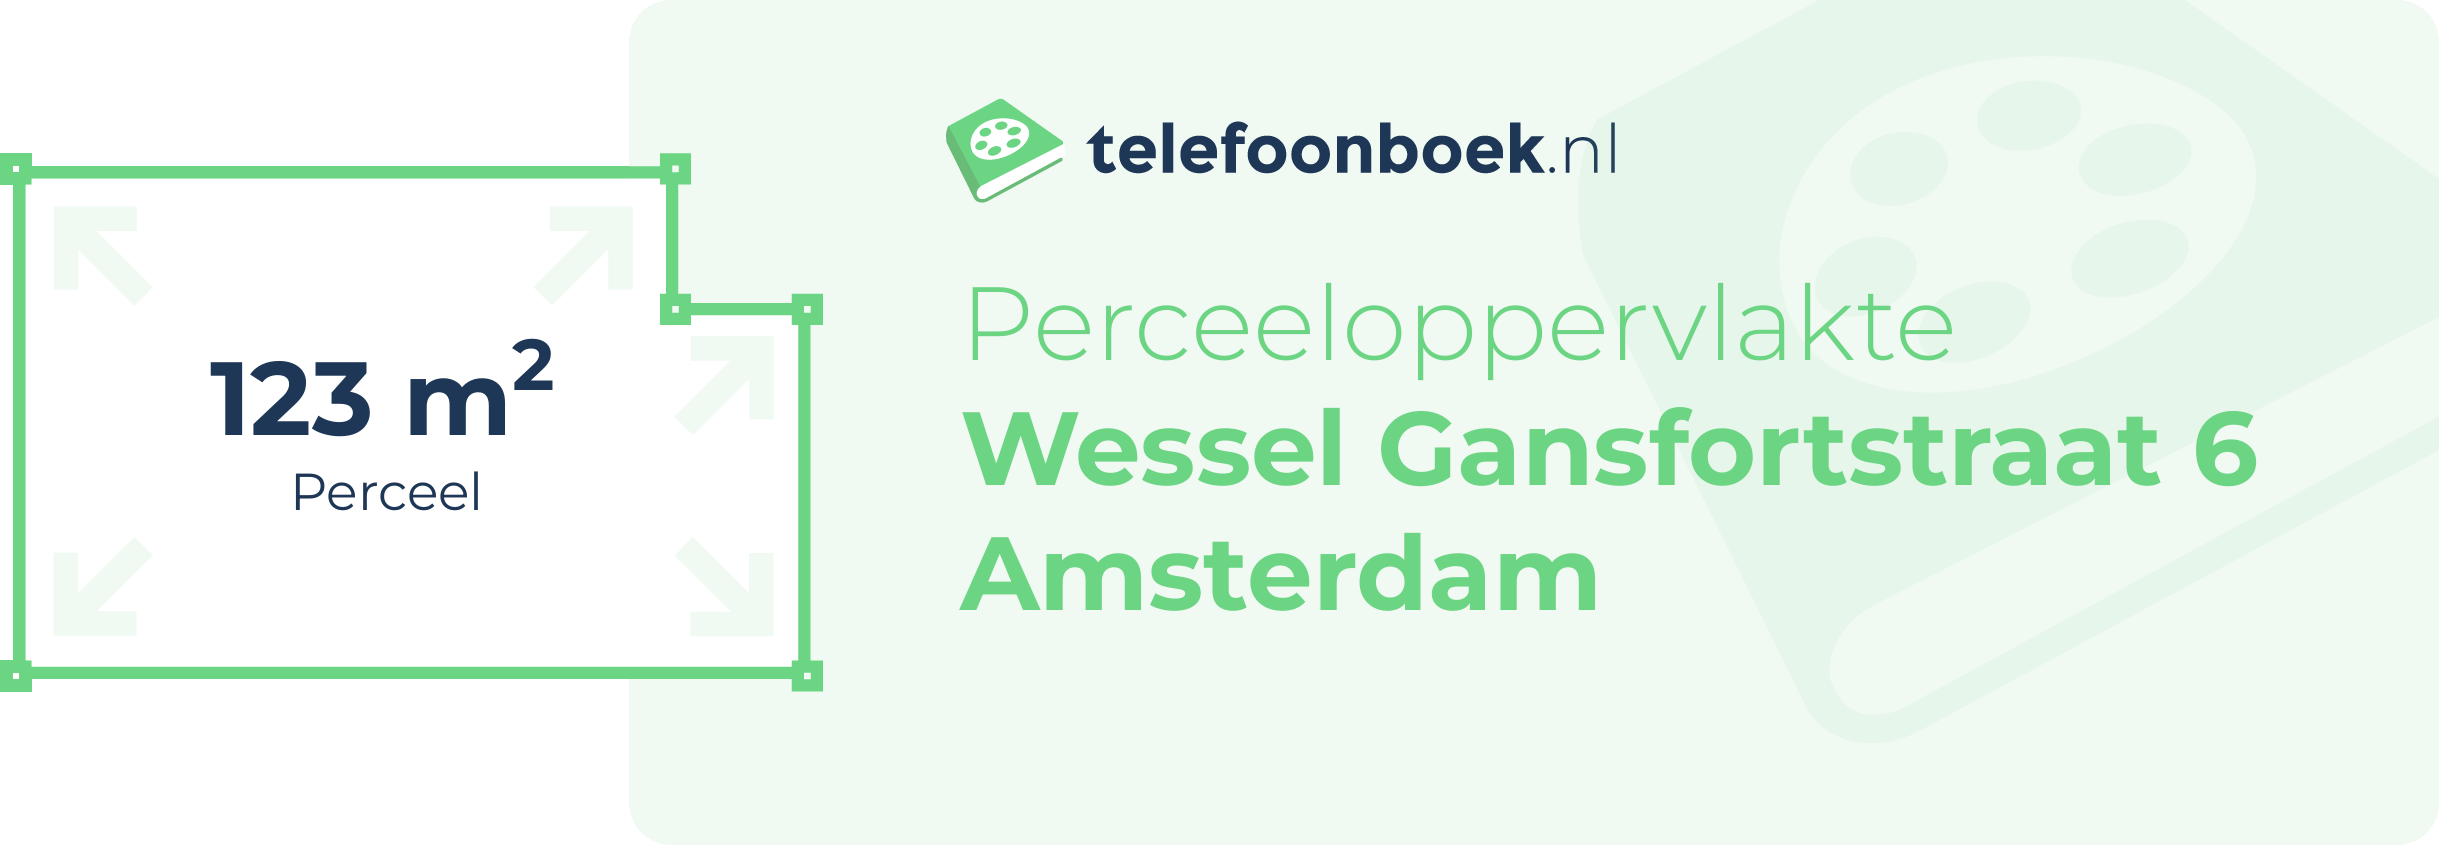 Perceeloppervlakte Wessel Gansfortstraat 6 Amsterdam